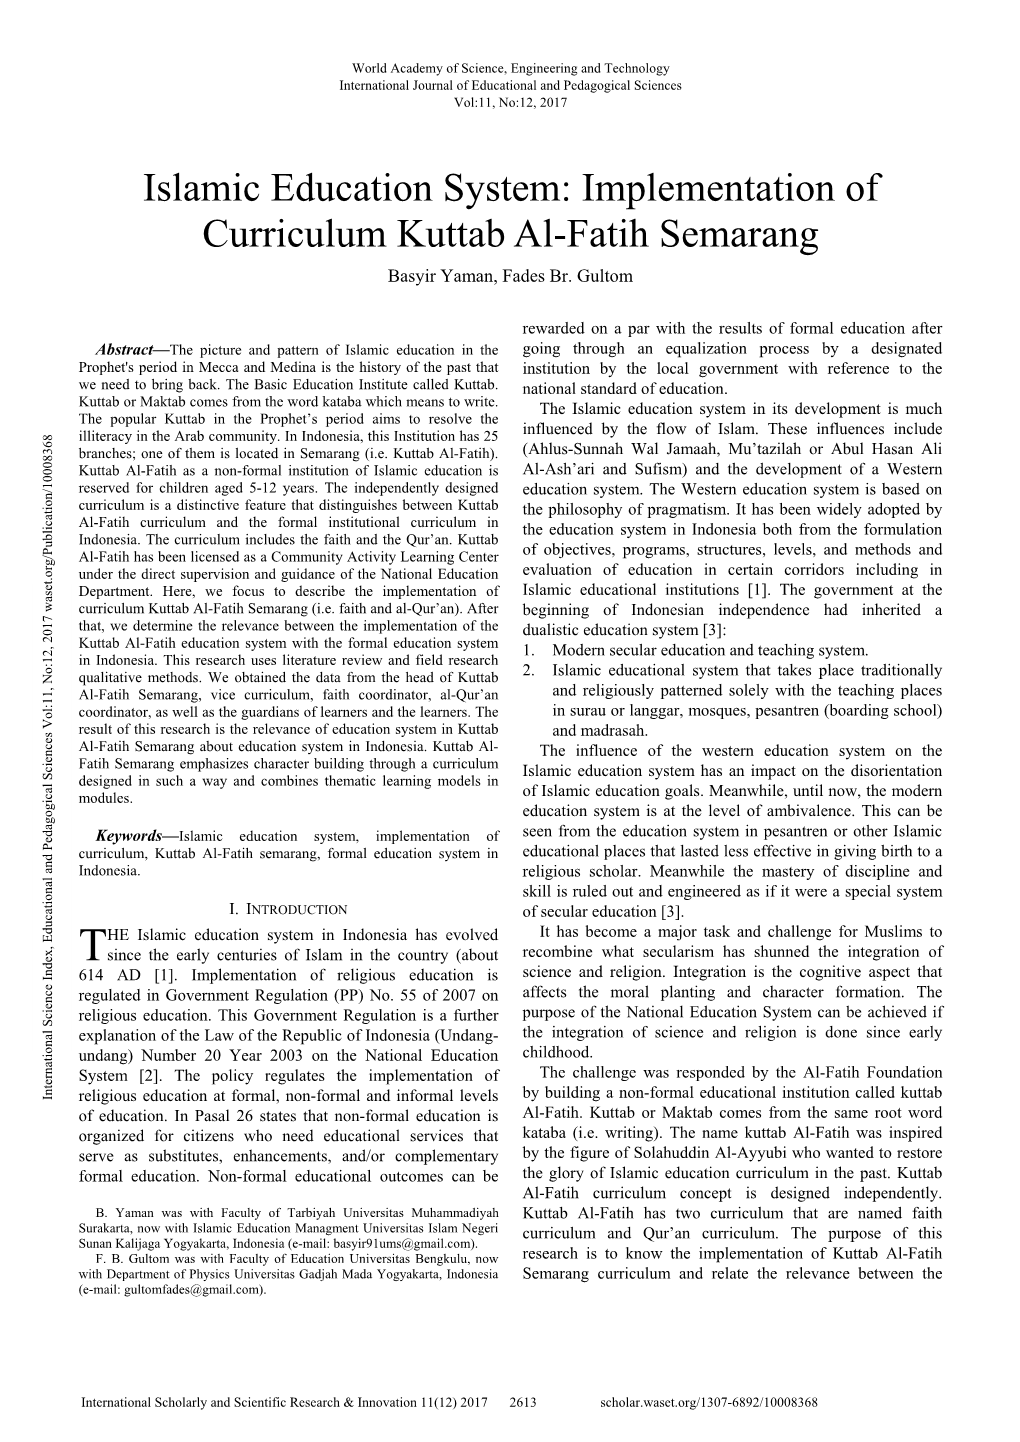 Implementation of Curriculum Kuttab Al-Fatih Semarang Basyir Yaman, Fades Br